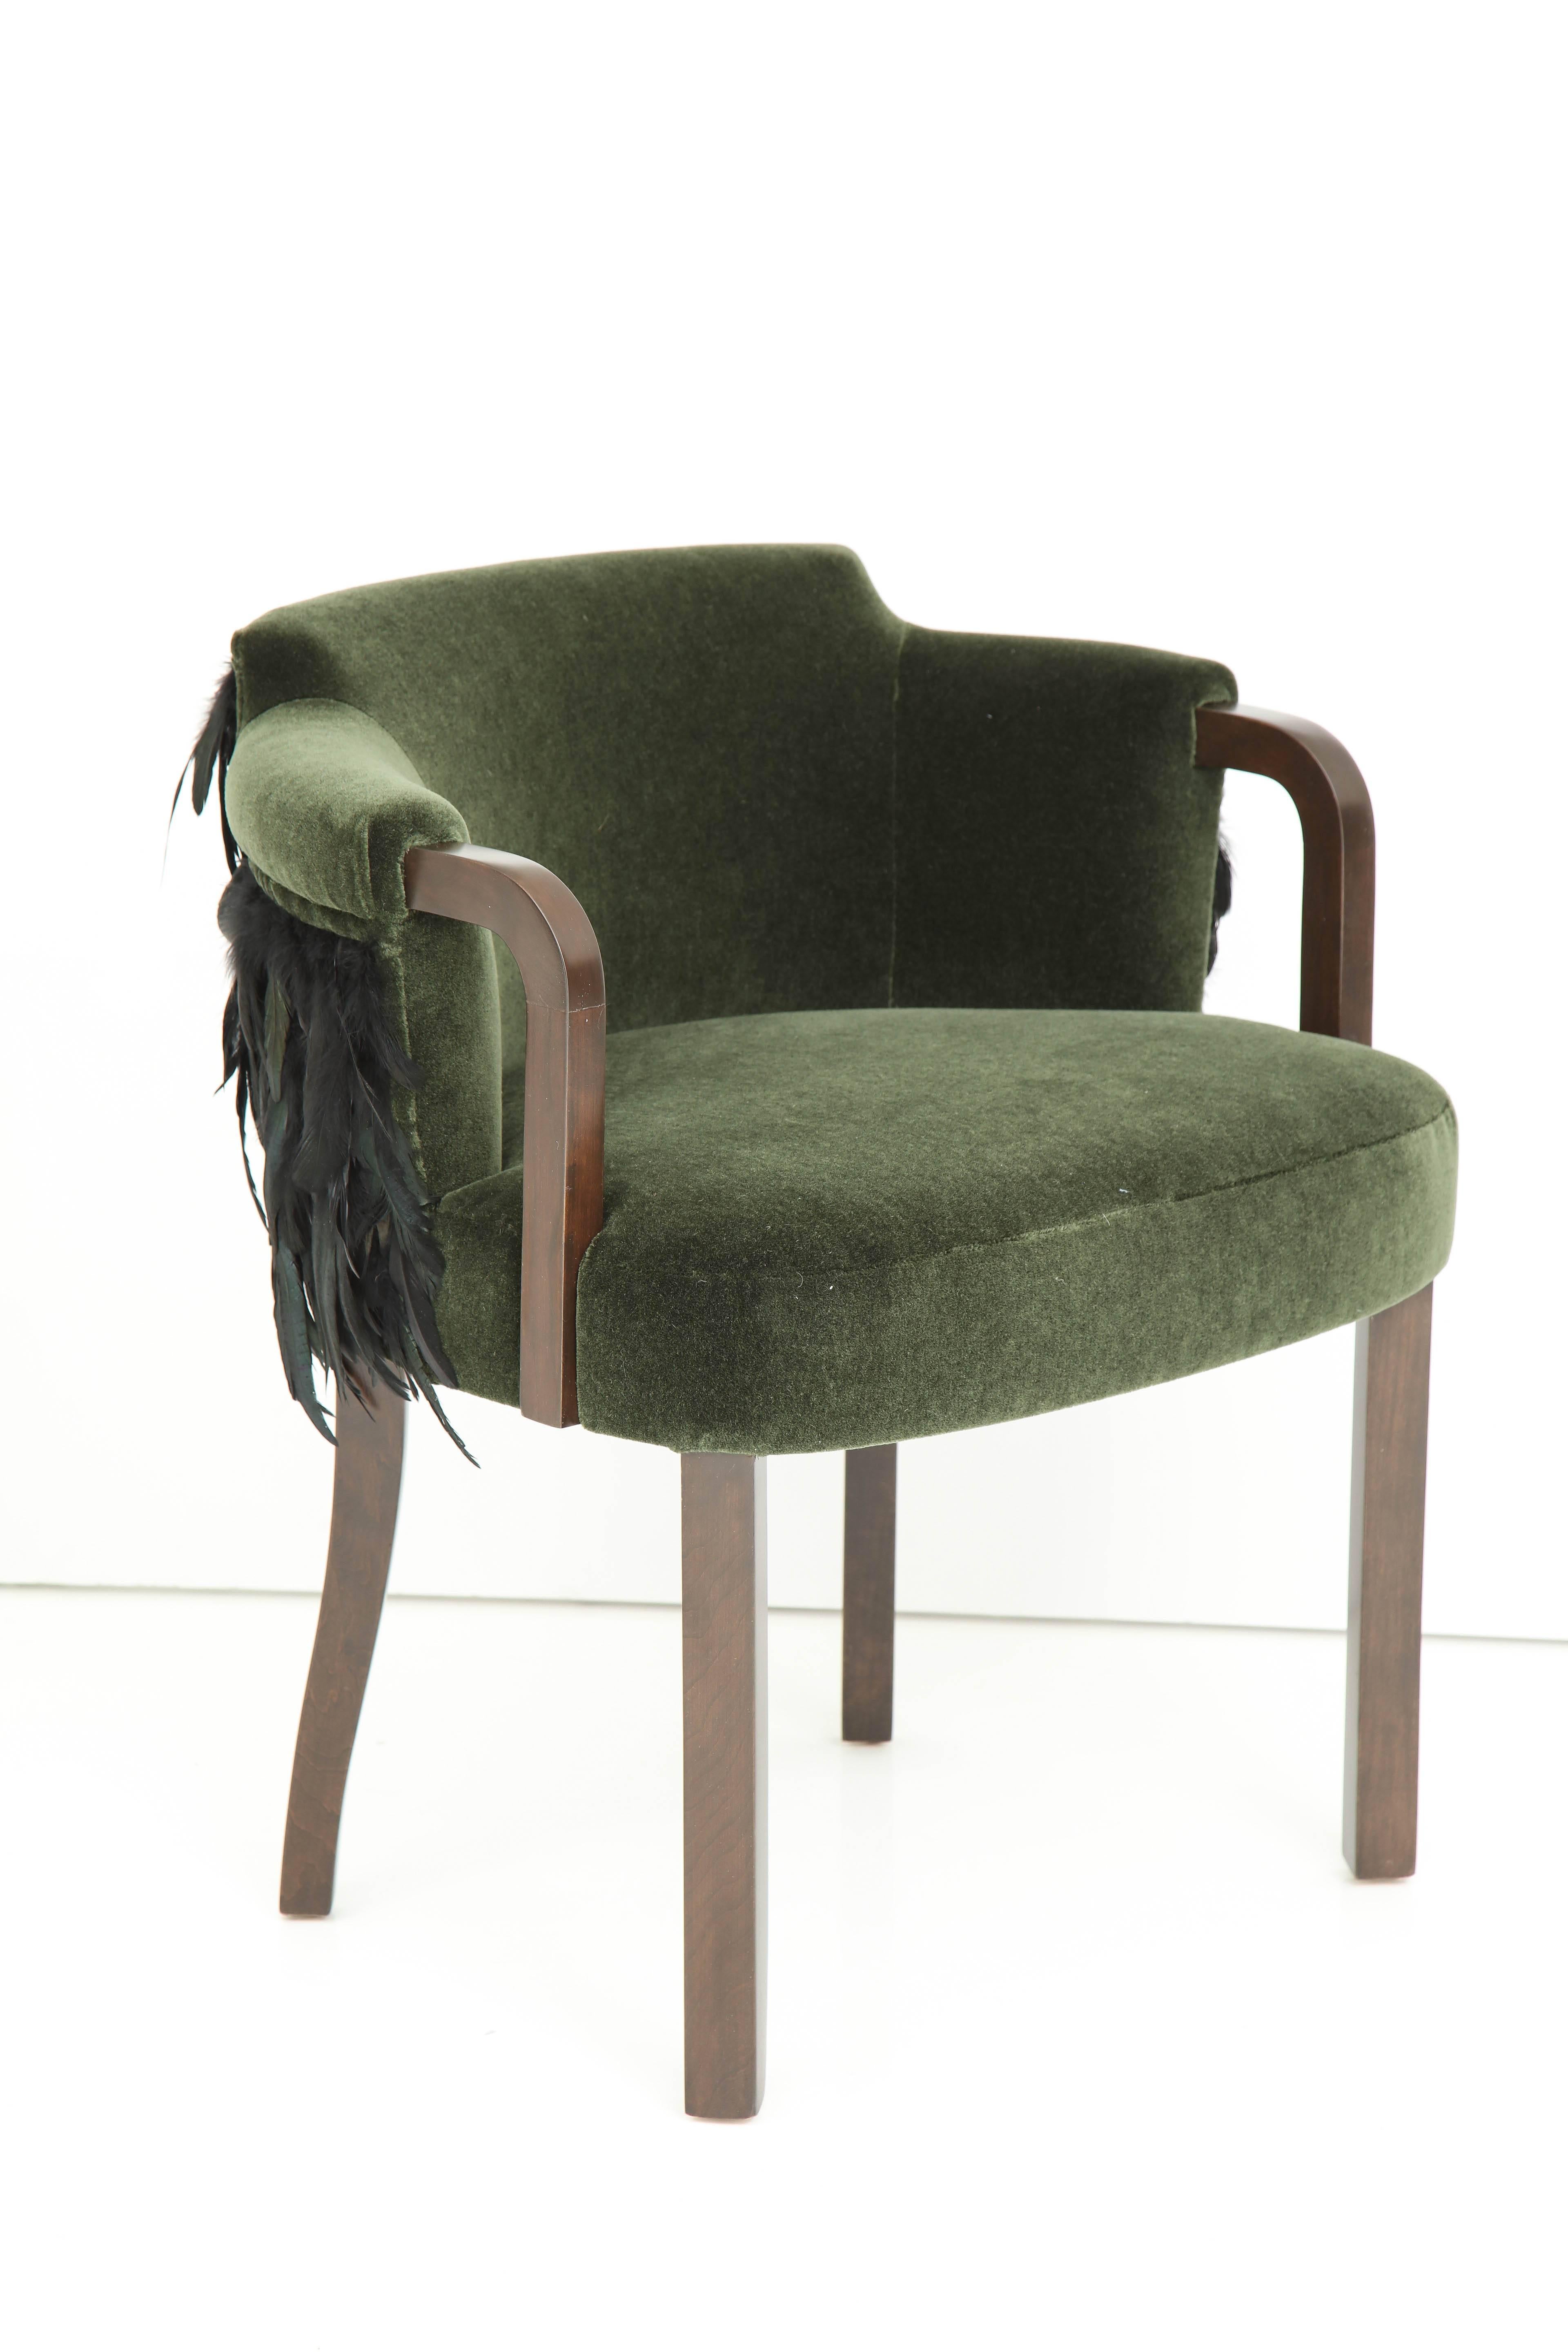 Austrian Mohair/Feather Art Deco Salon Chairs 2